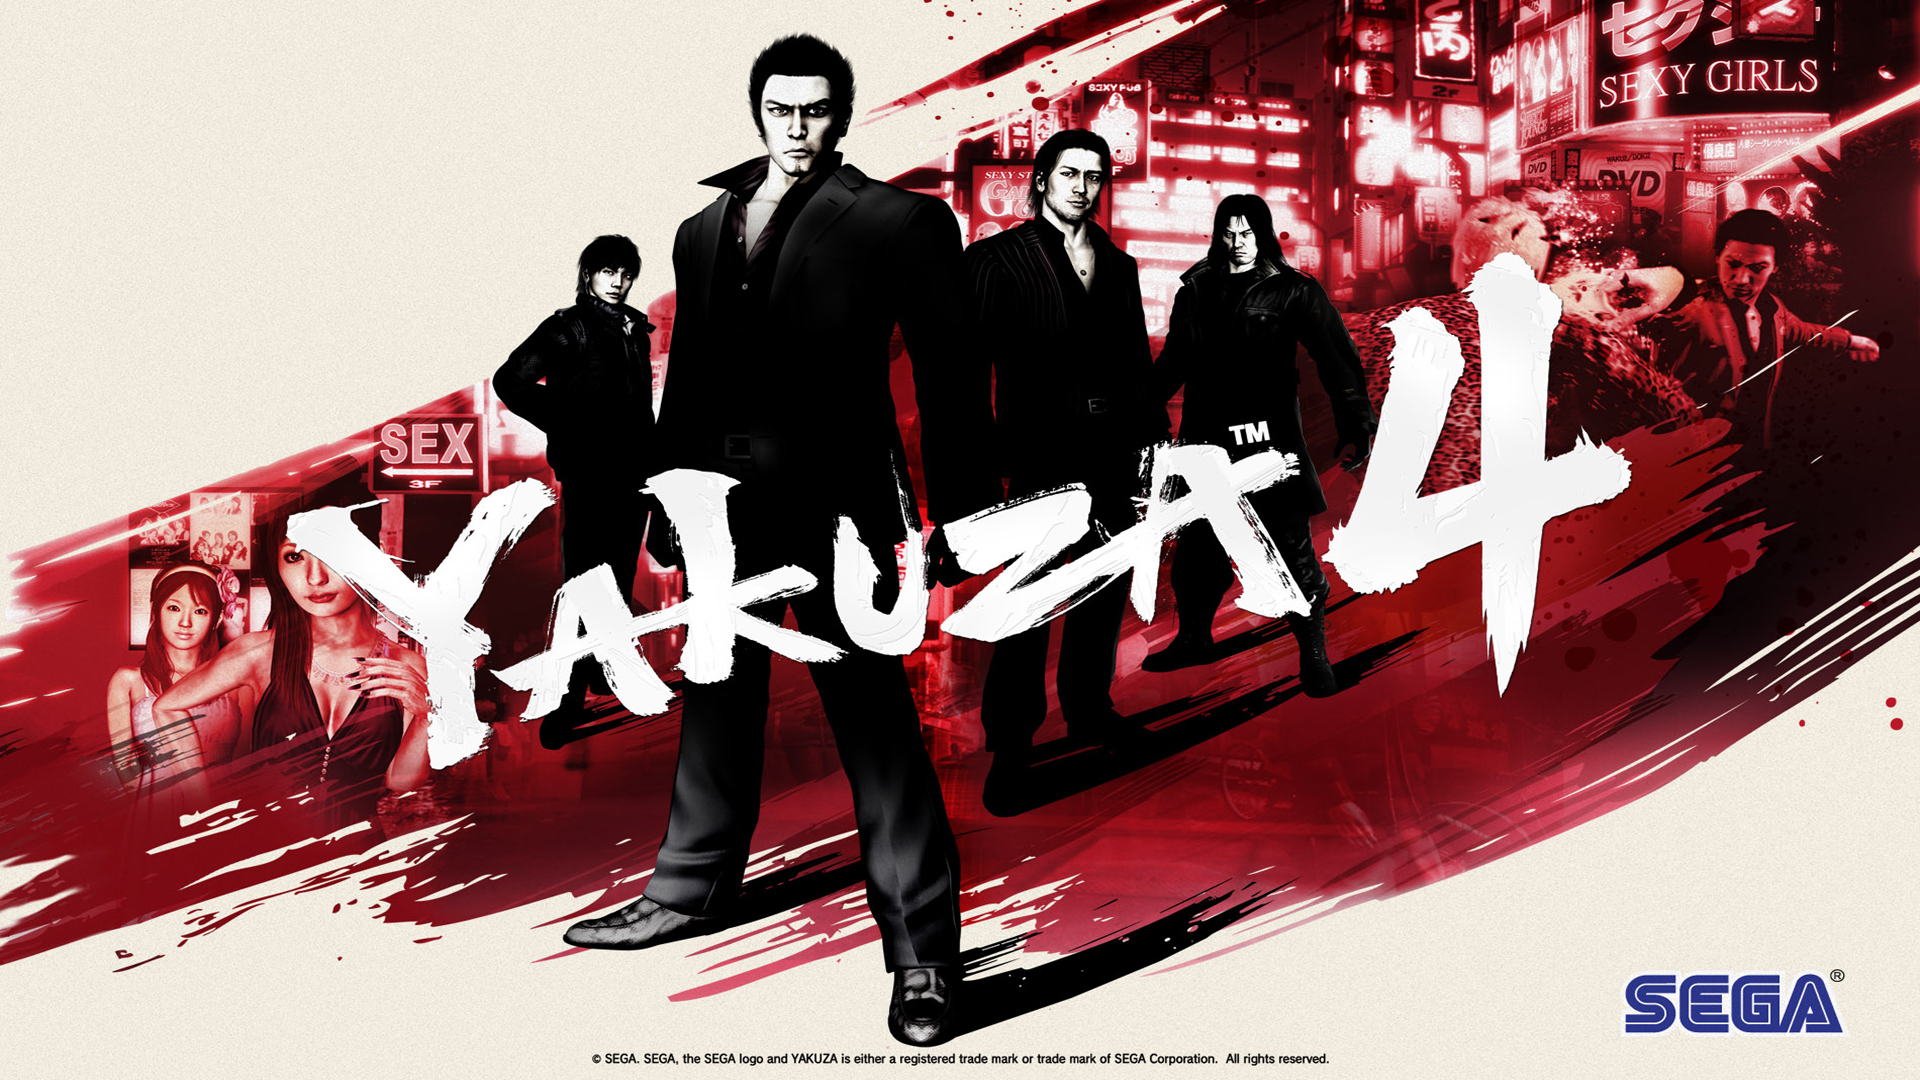 735257 Bild herunterladen computerspiele, yakuza 4, kazuma kiryu, masayoshi tanimura, meide akiyama, taiga saejima - Hintergrundbilder und Bildschirmschoner kostenlos